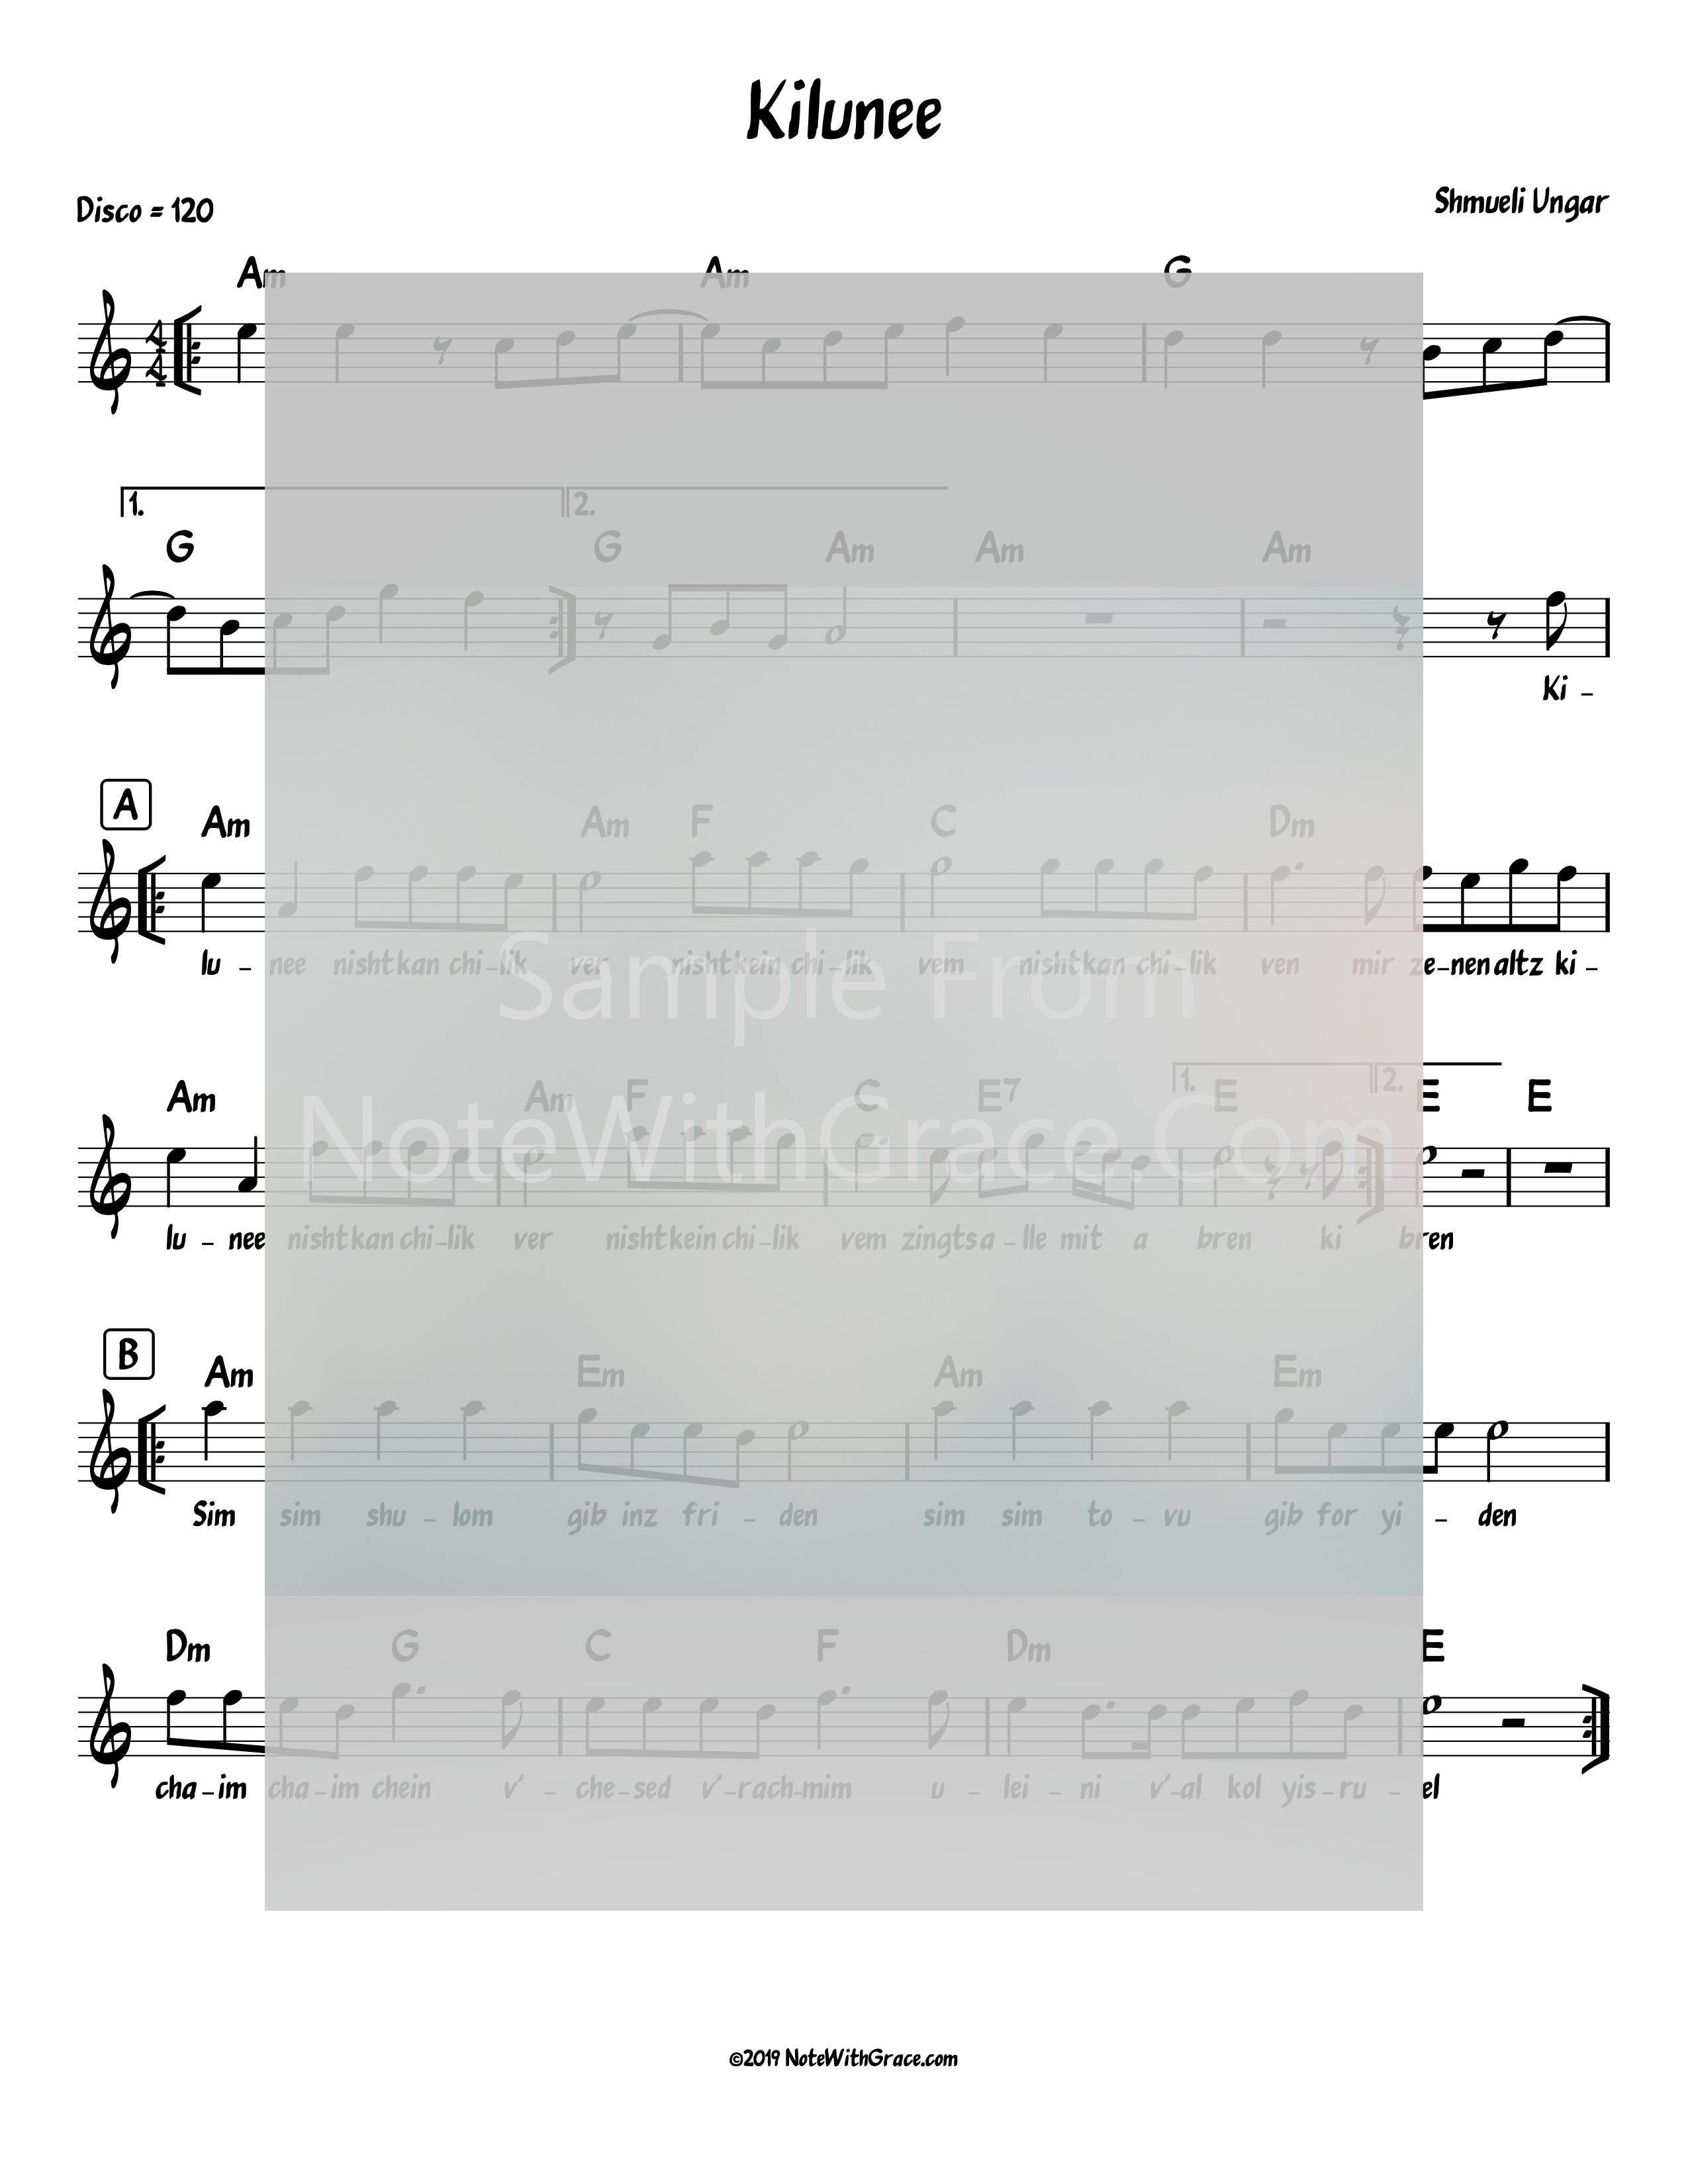 Kilunee Lead Sheet (Shmueli Ungar) Album: Single 2019-Sheet music-NoteWithGrace.com